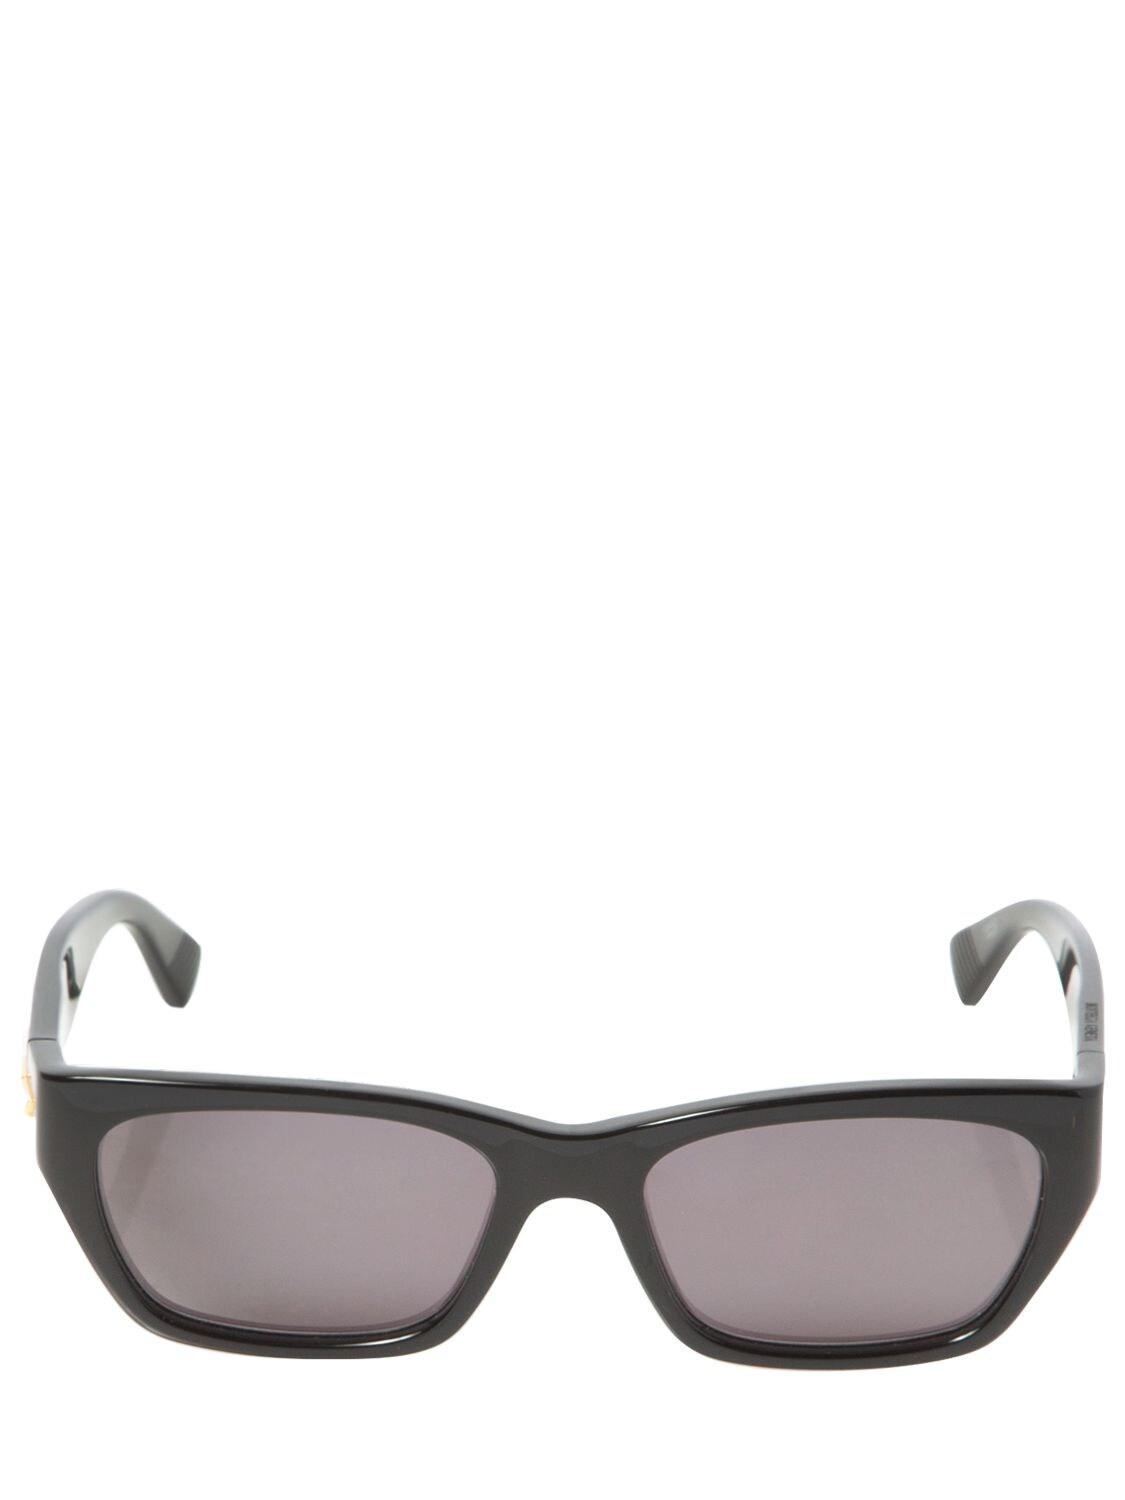 Bottega Veneta Bv1143s Classic Acetate Sunglasses in Black (Gray) | Lyst